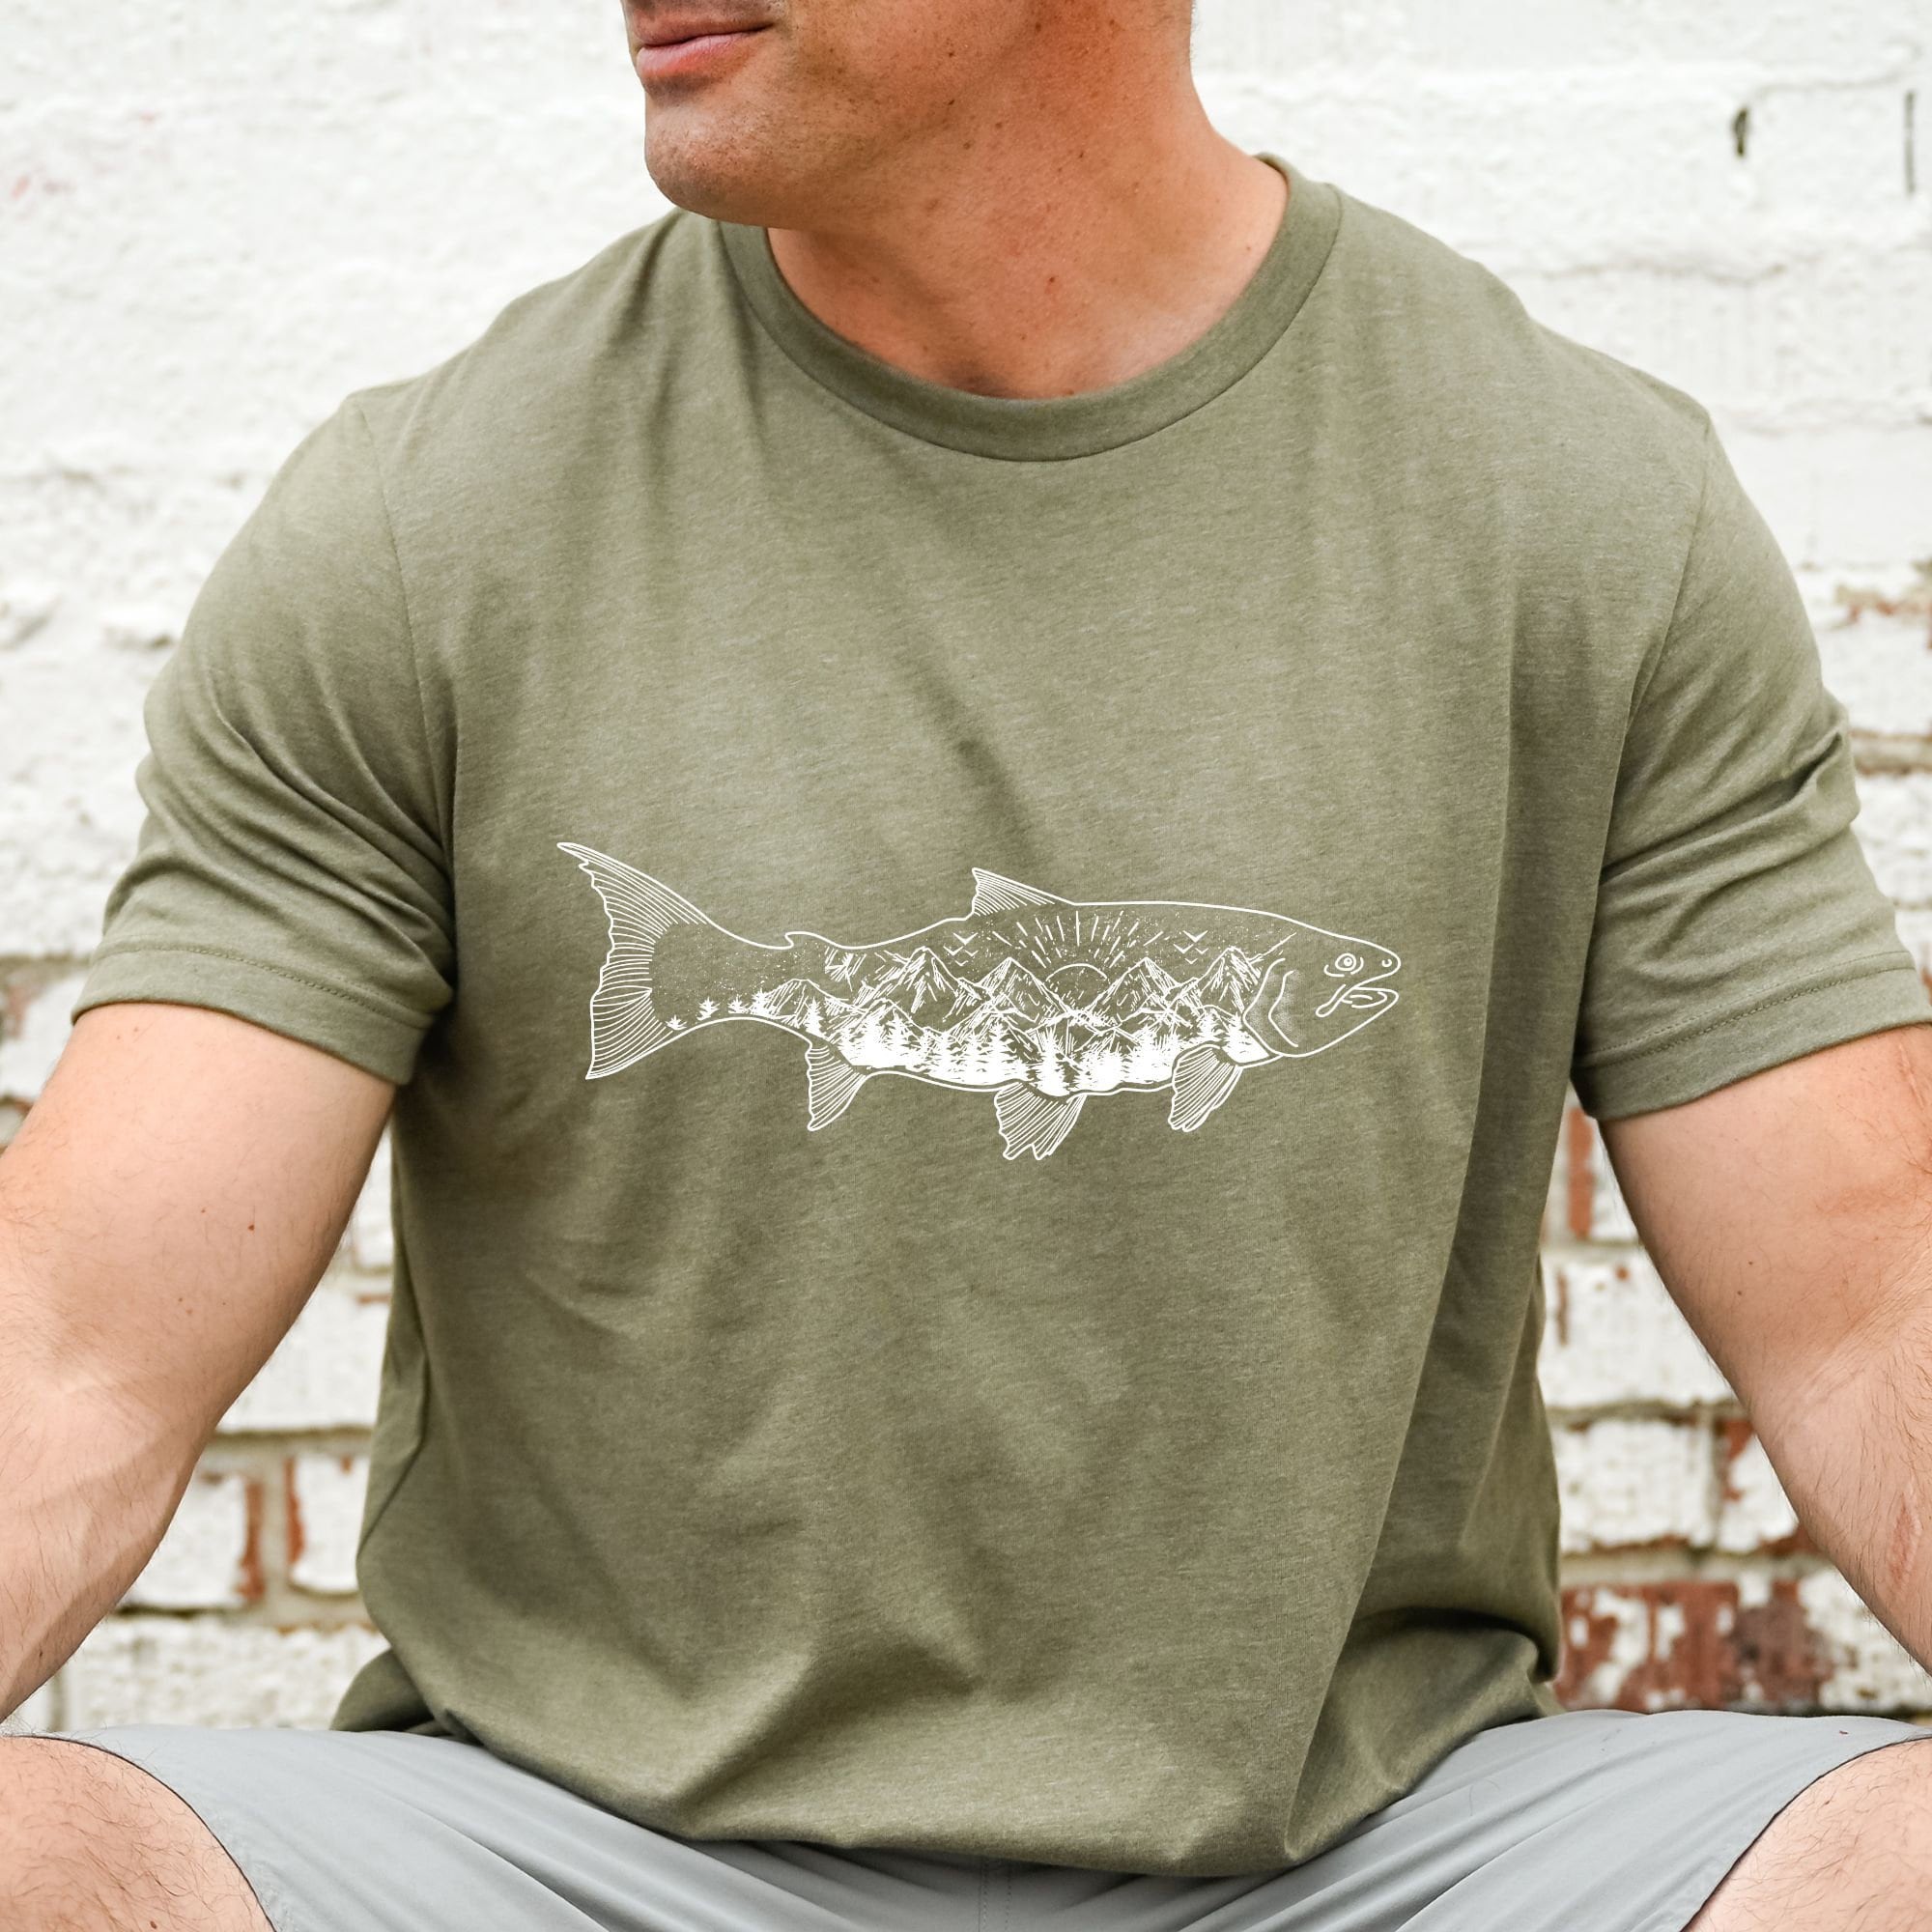 Mens Shirts, Fishing Shirt, Fishing Gift, Salmon Shirts, Fishing T Shirt,  Fisherman Shirt, Graphic Tees for Men, Nature, Camping Shirts 